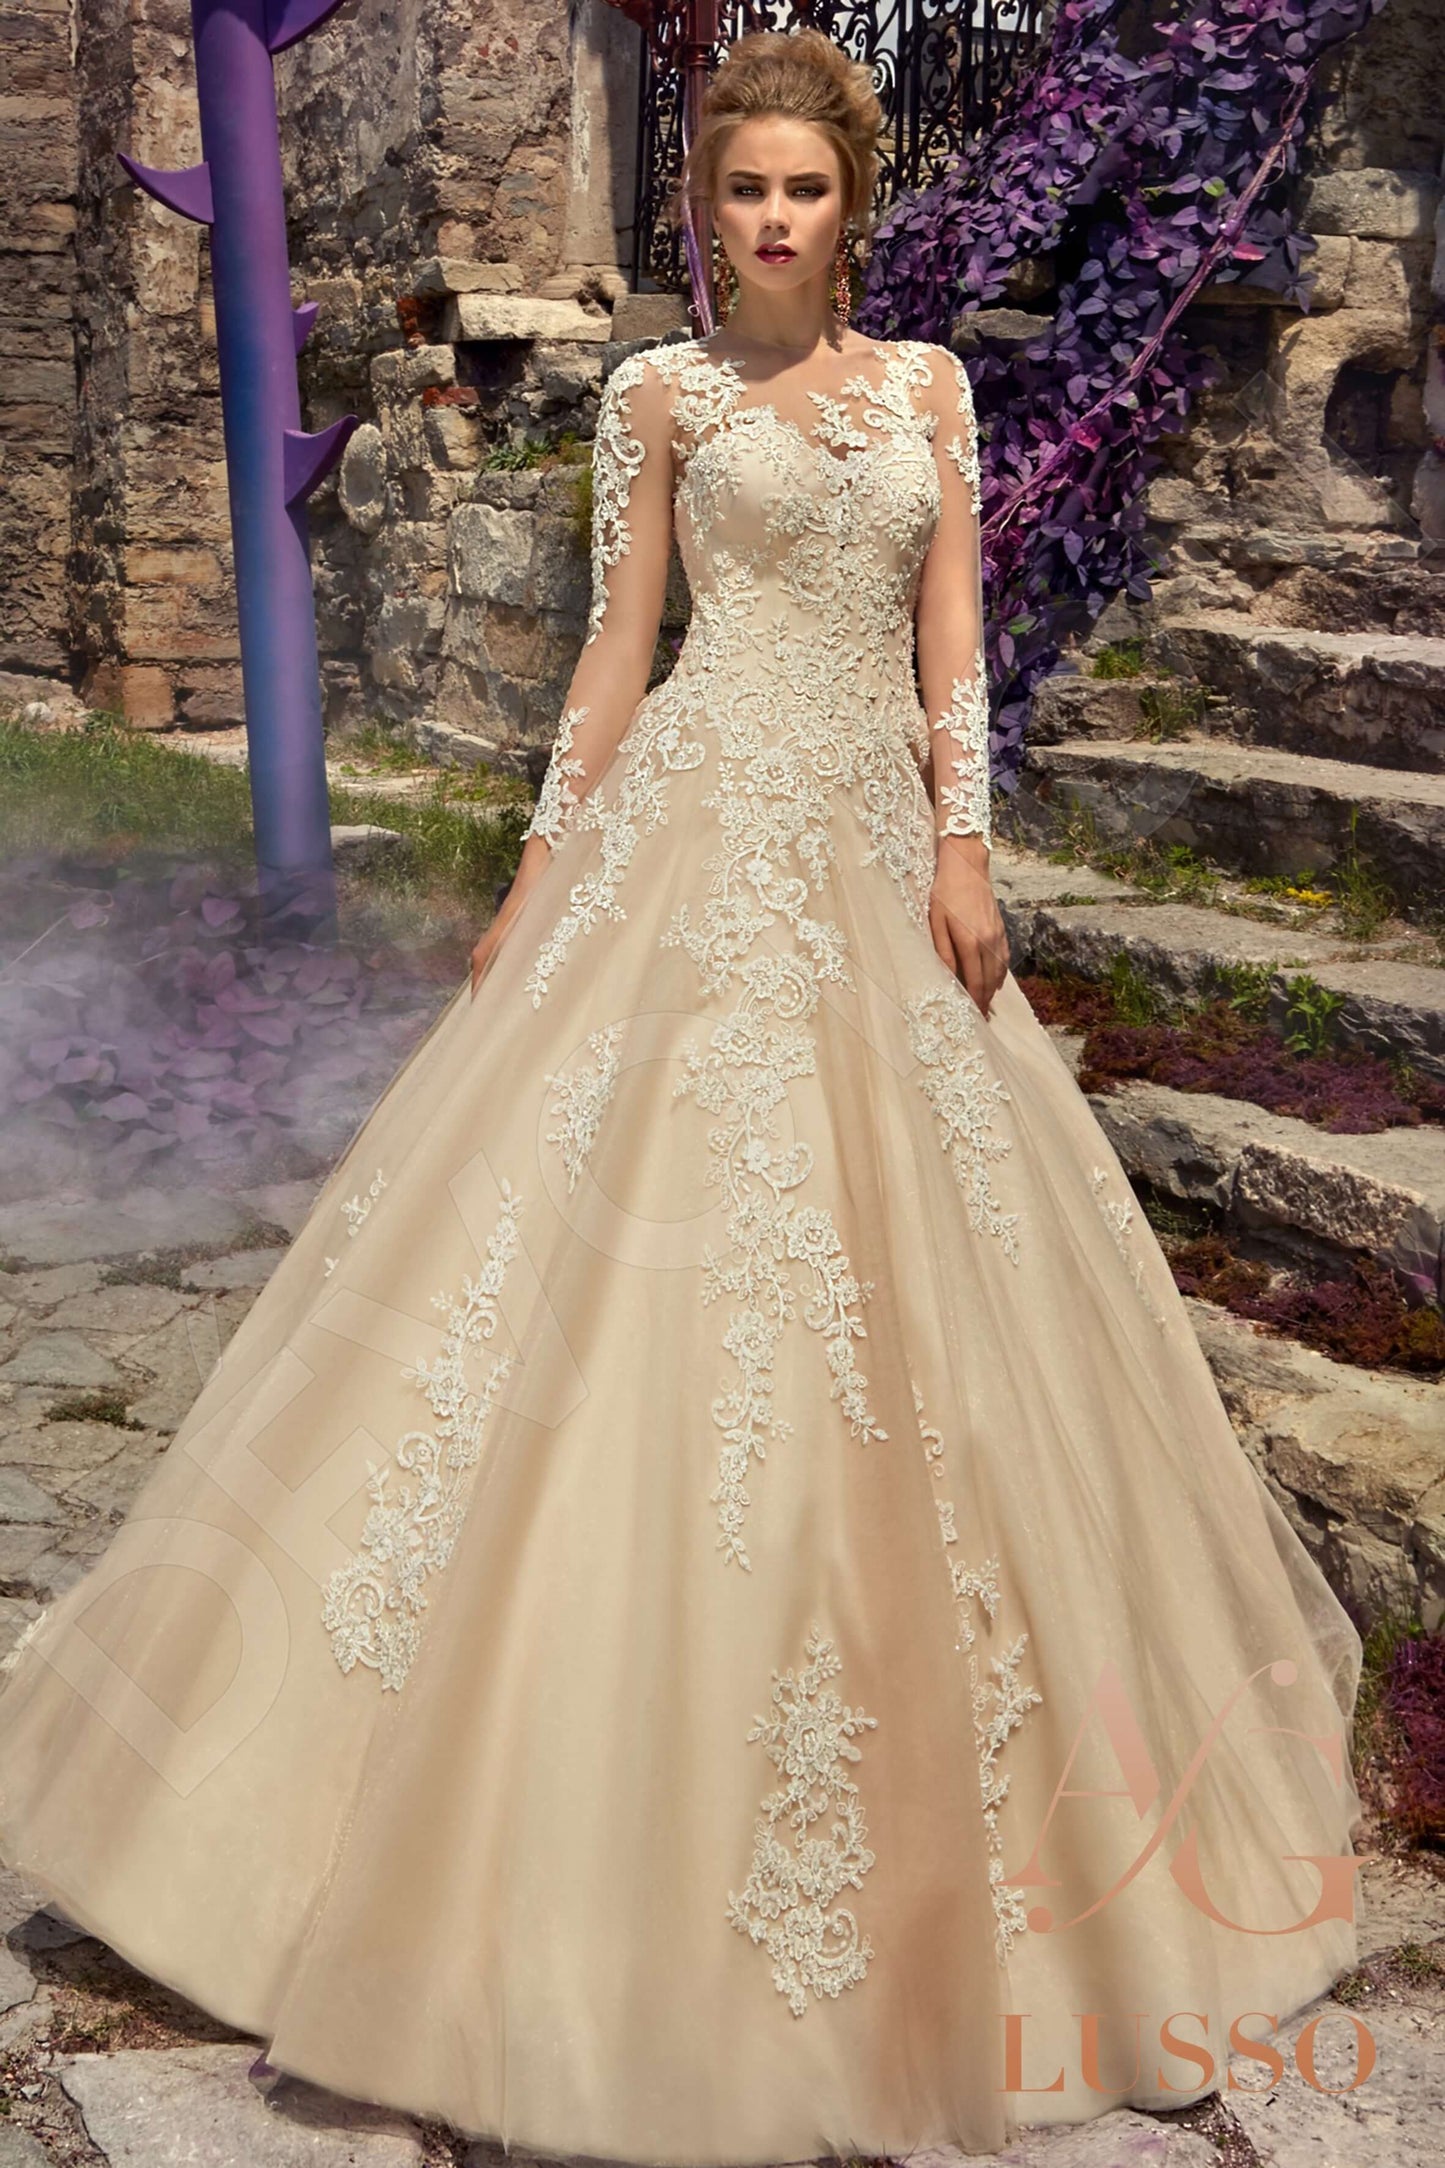 Libella Princess/Ball Gown Illusion back Long sleeve Wedding Dress Front